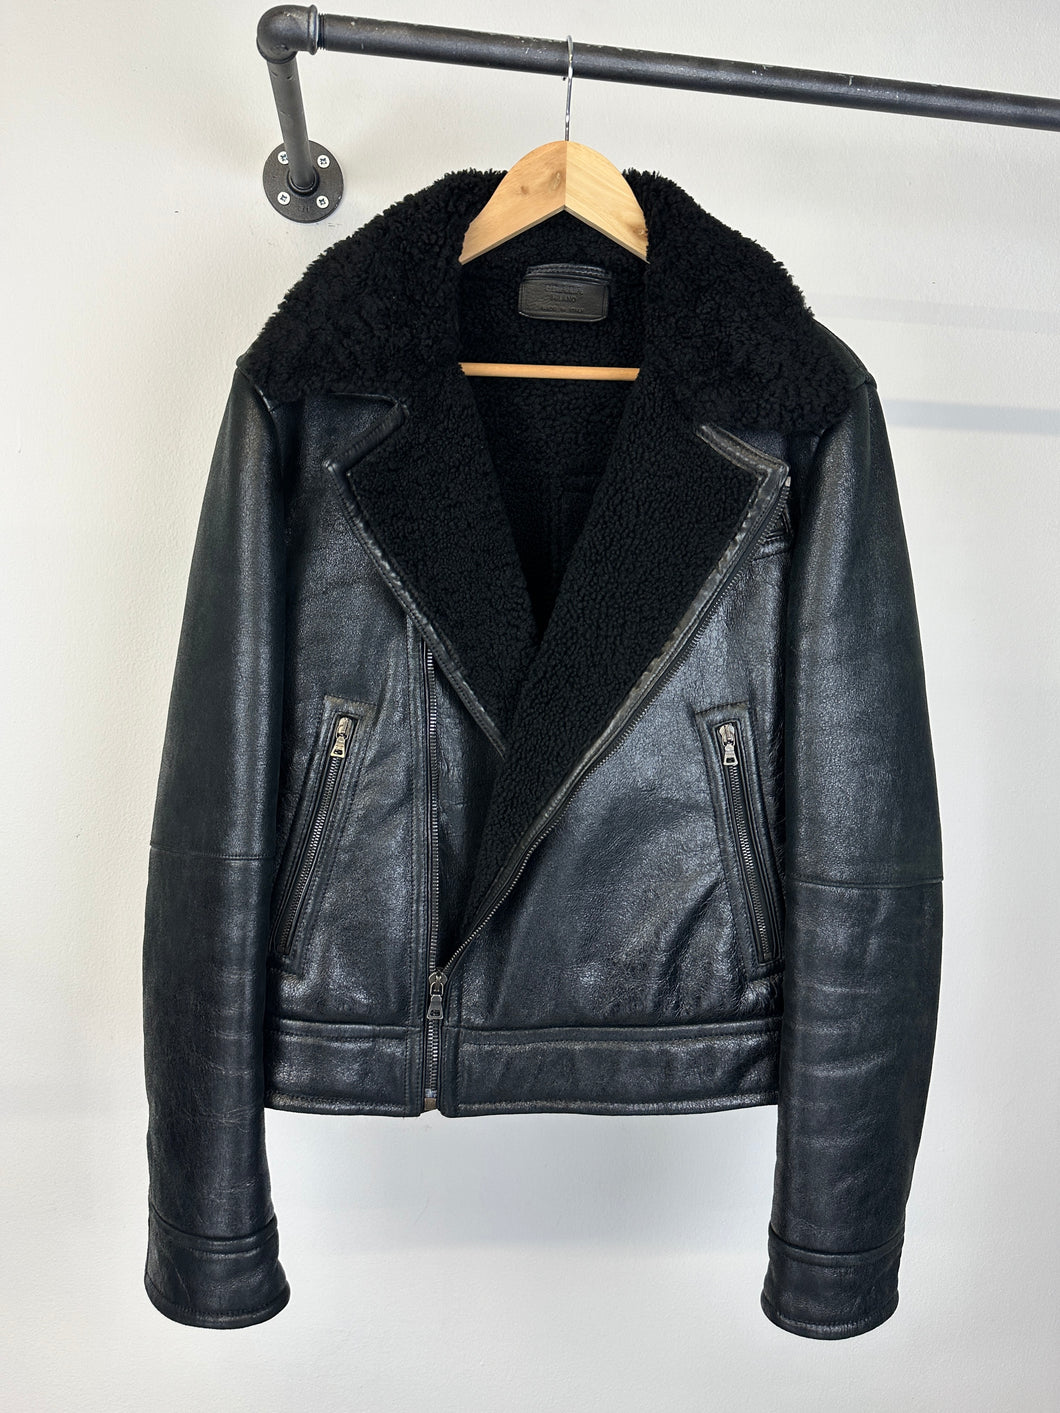 AW2007 Prada shearling leather jacket